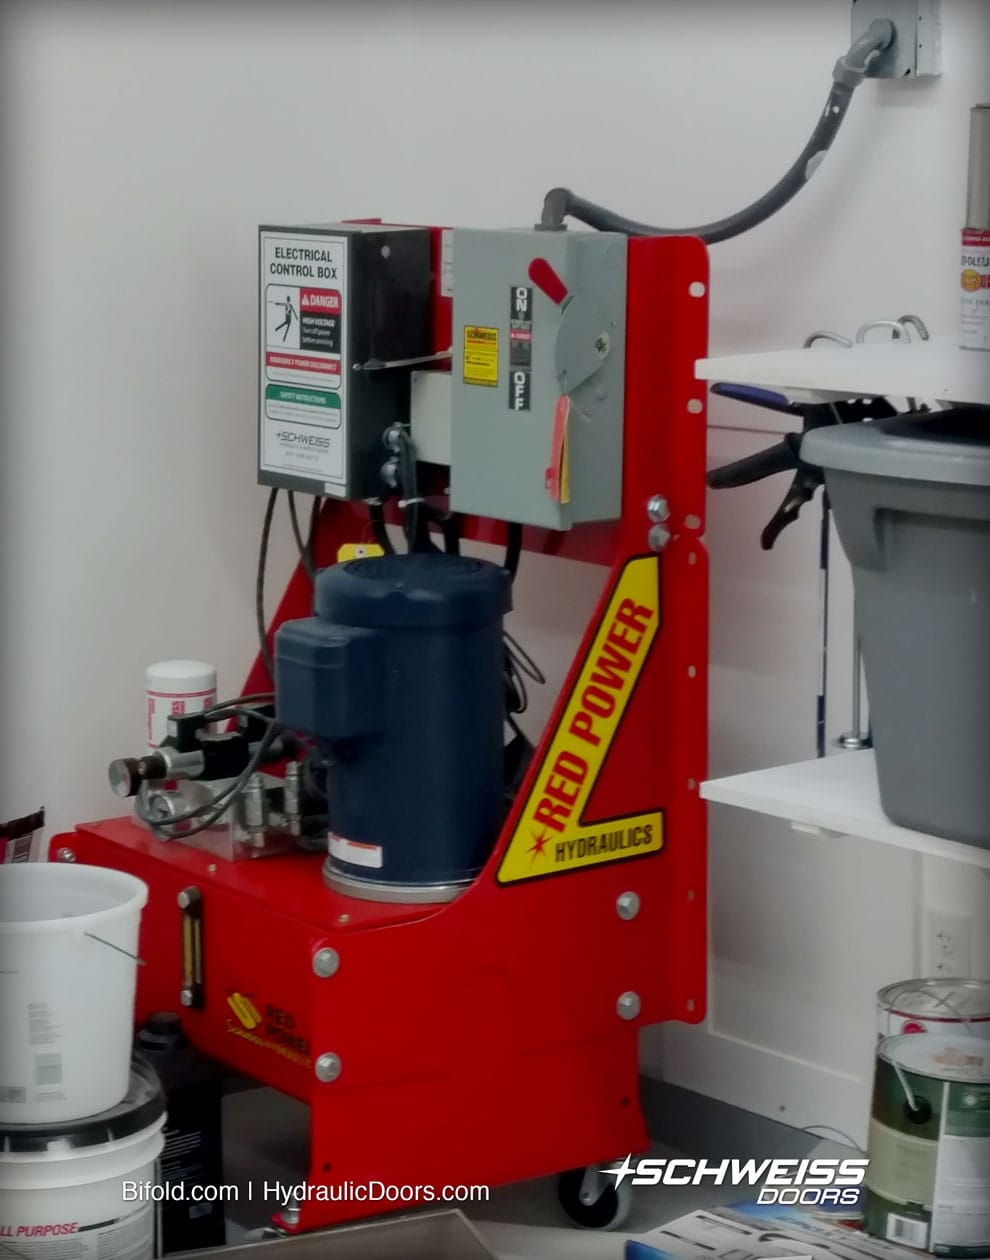 Schweiss Hydraulic Pump is in the top level of his garage/workshop.